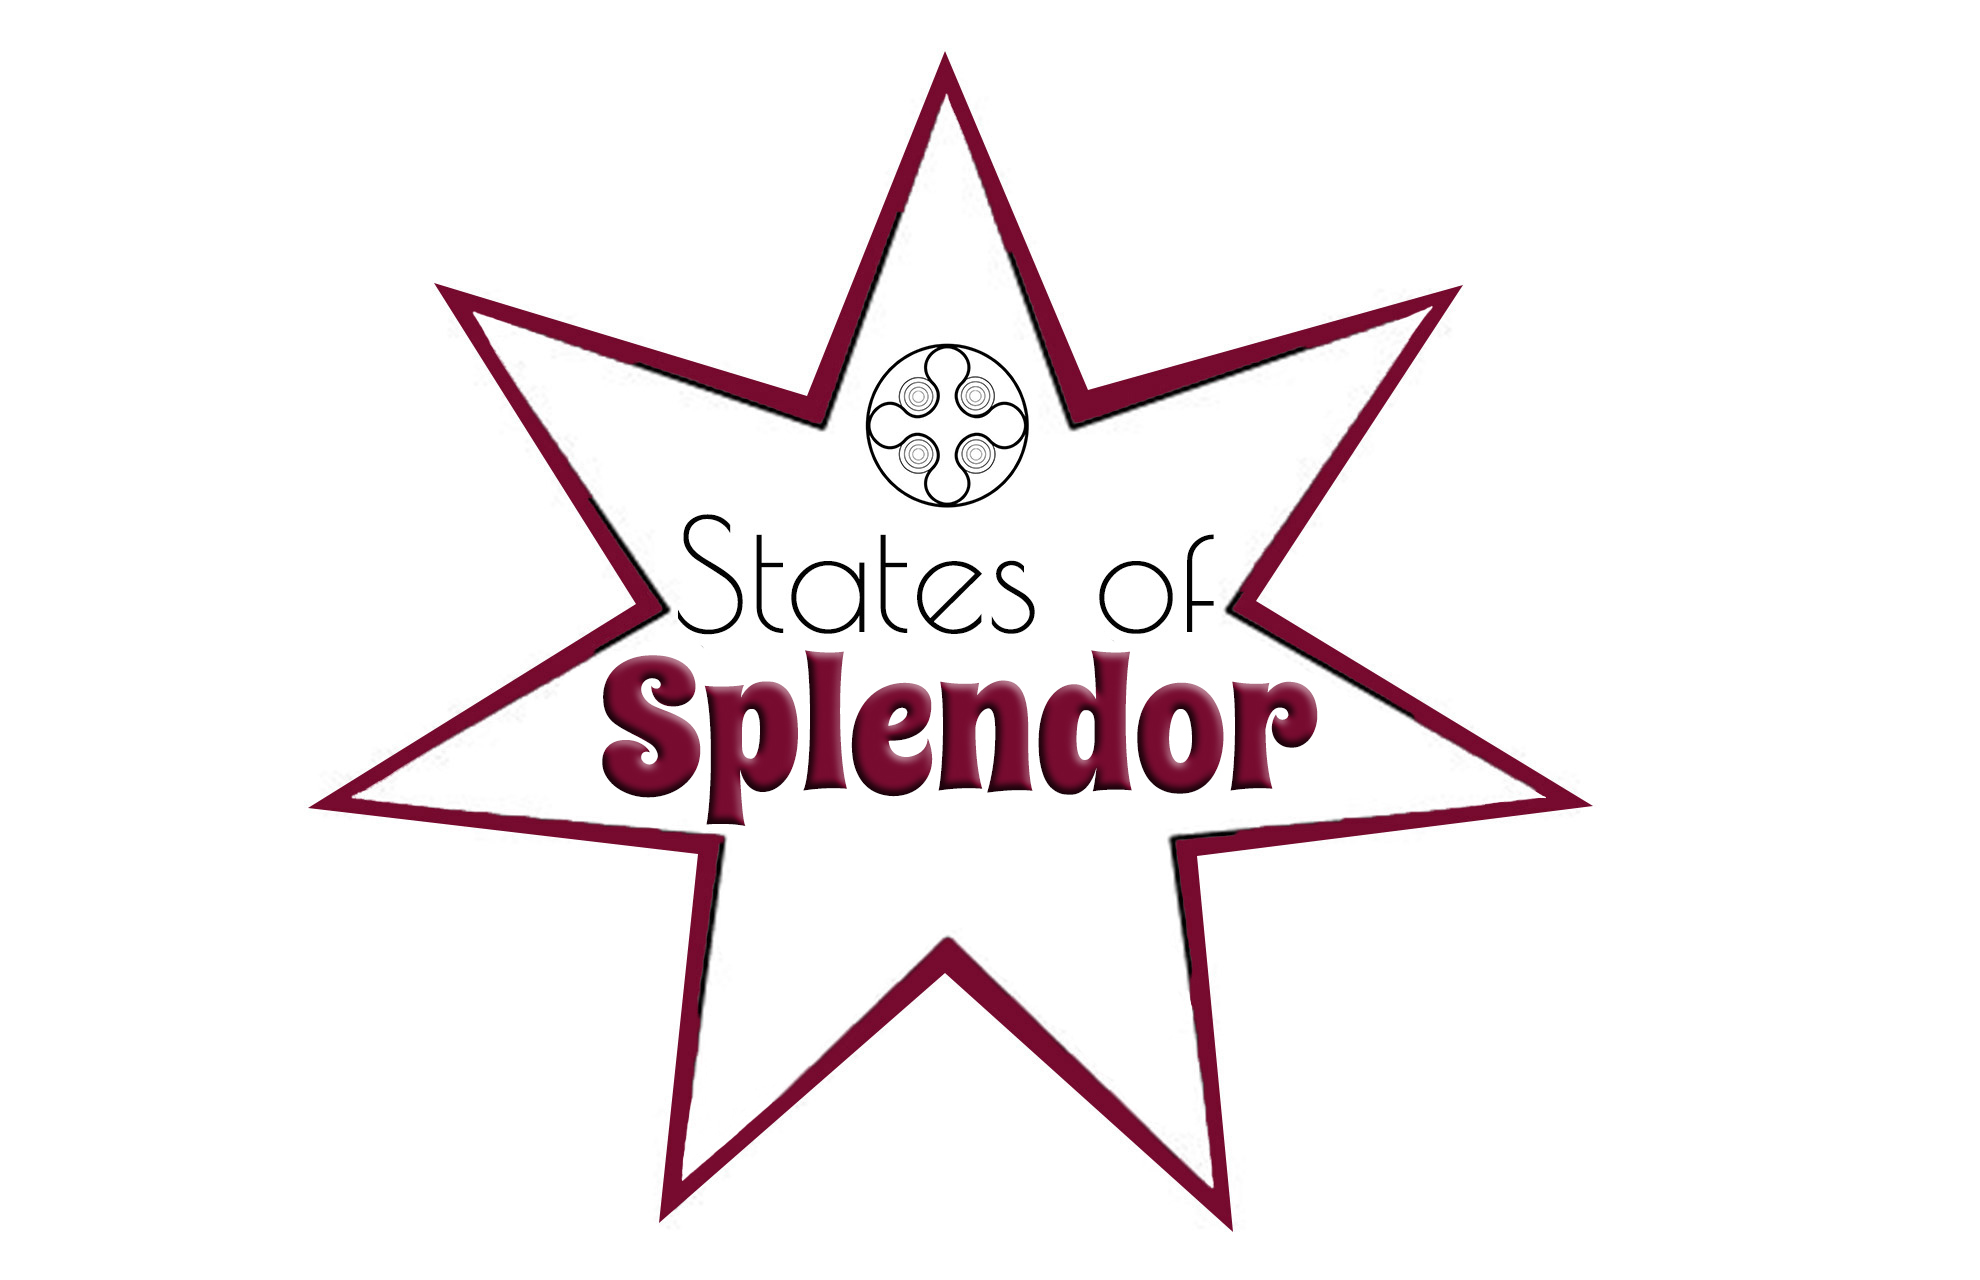 States of Splendor